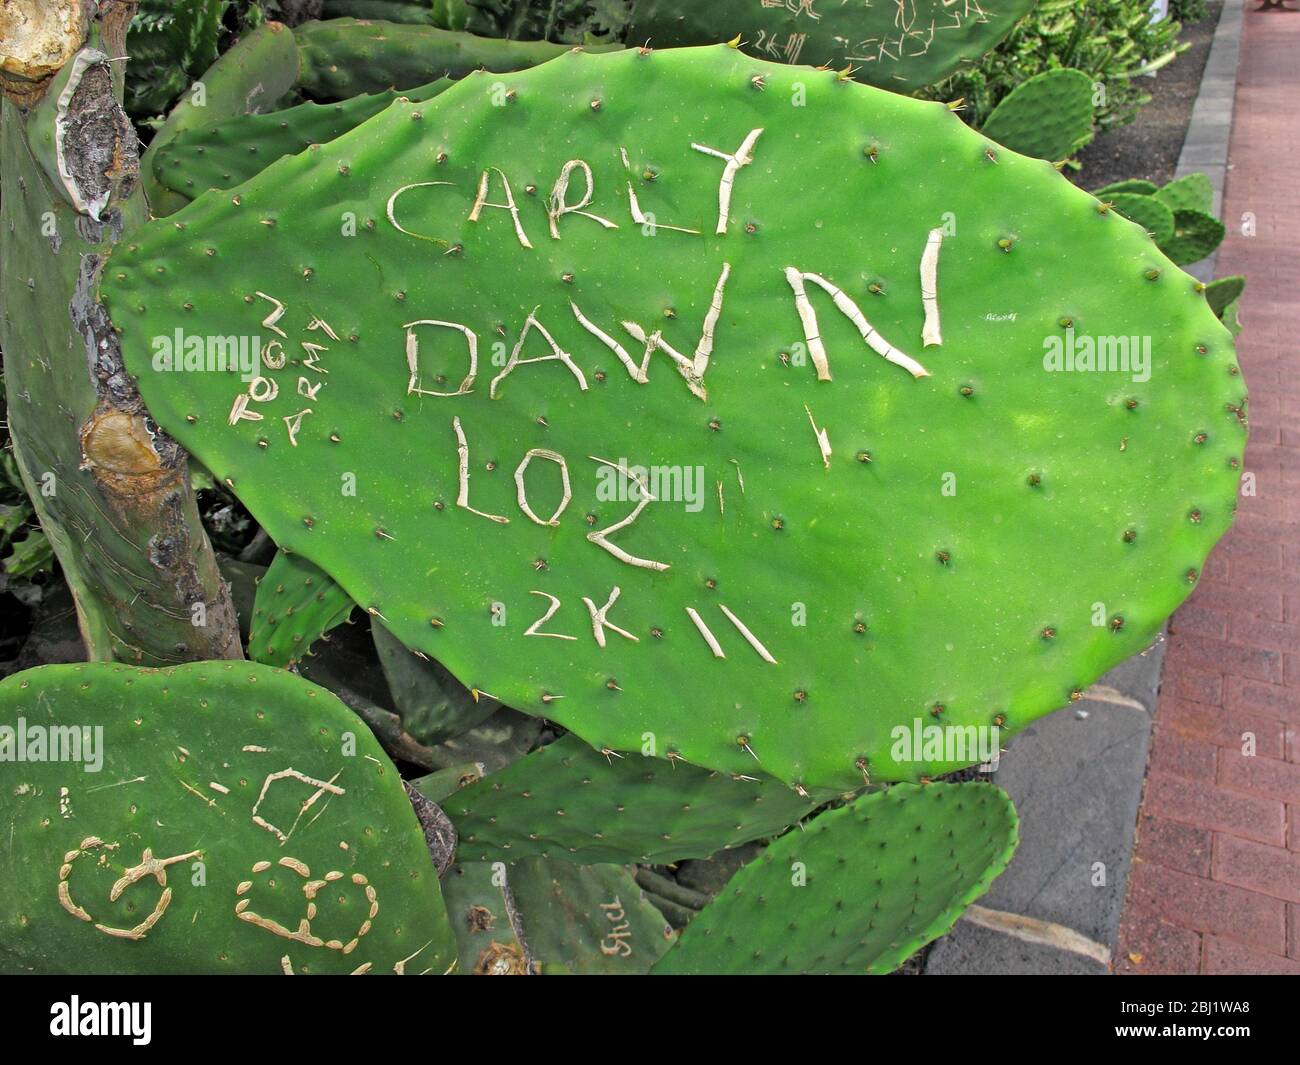 Carly Dawn,Toon Army,Loz,2k11,tallado,en cactus,graffiti Foto de stock